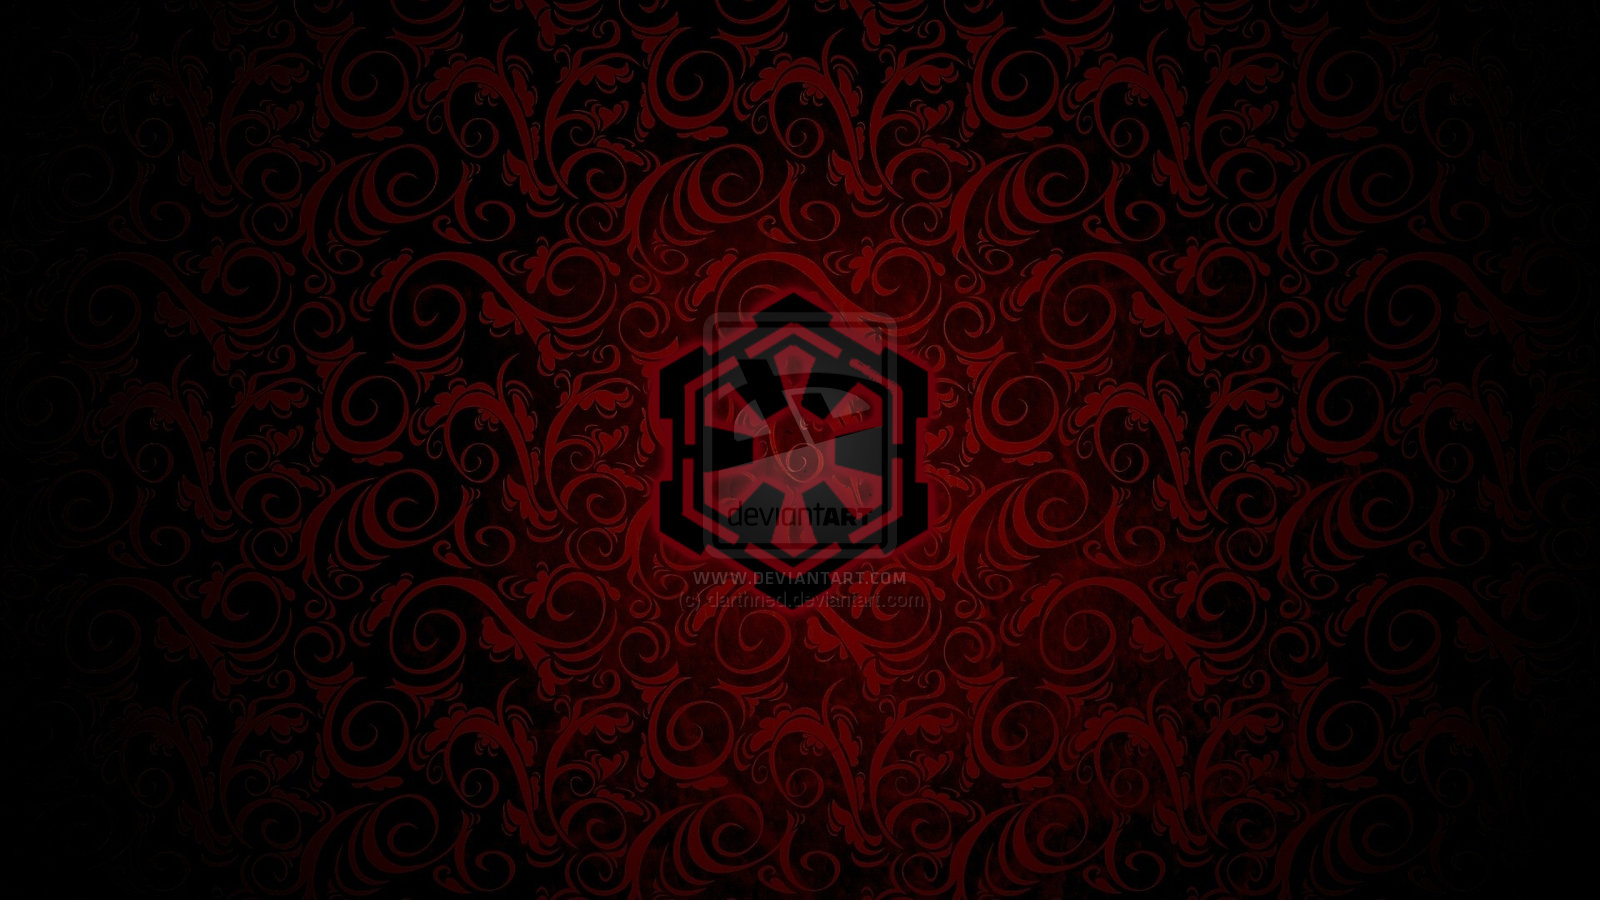 Sith Empire Logo Wallpapers